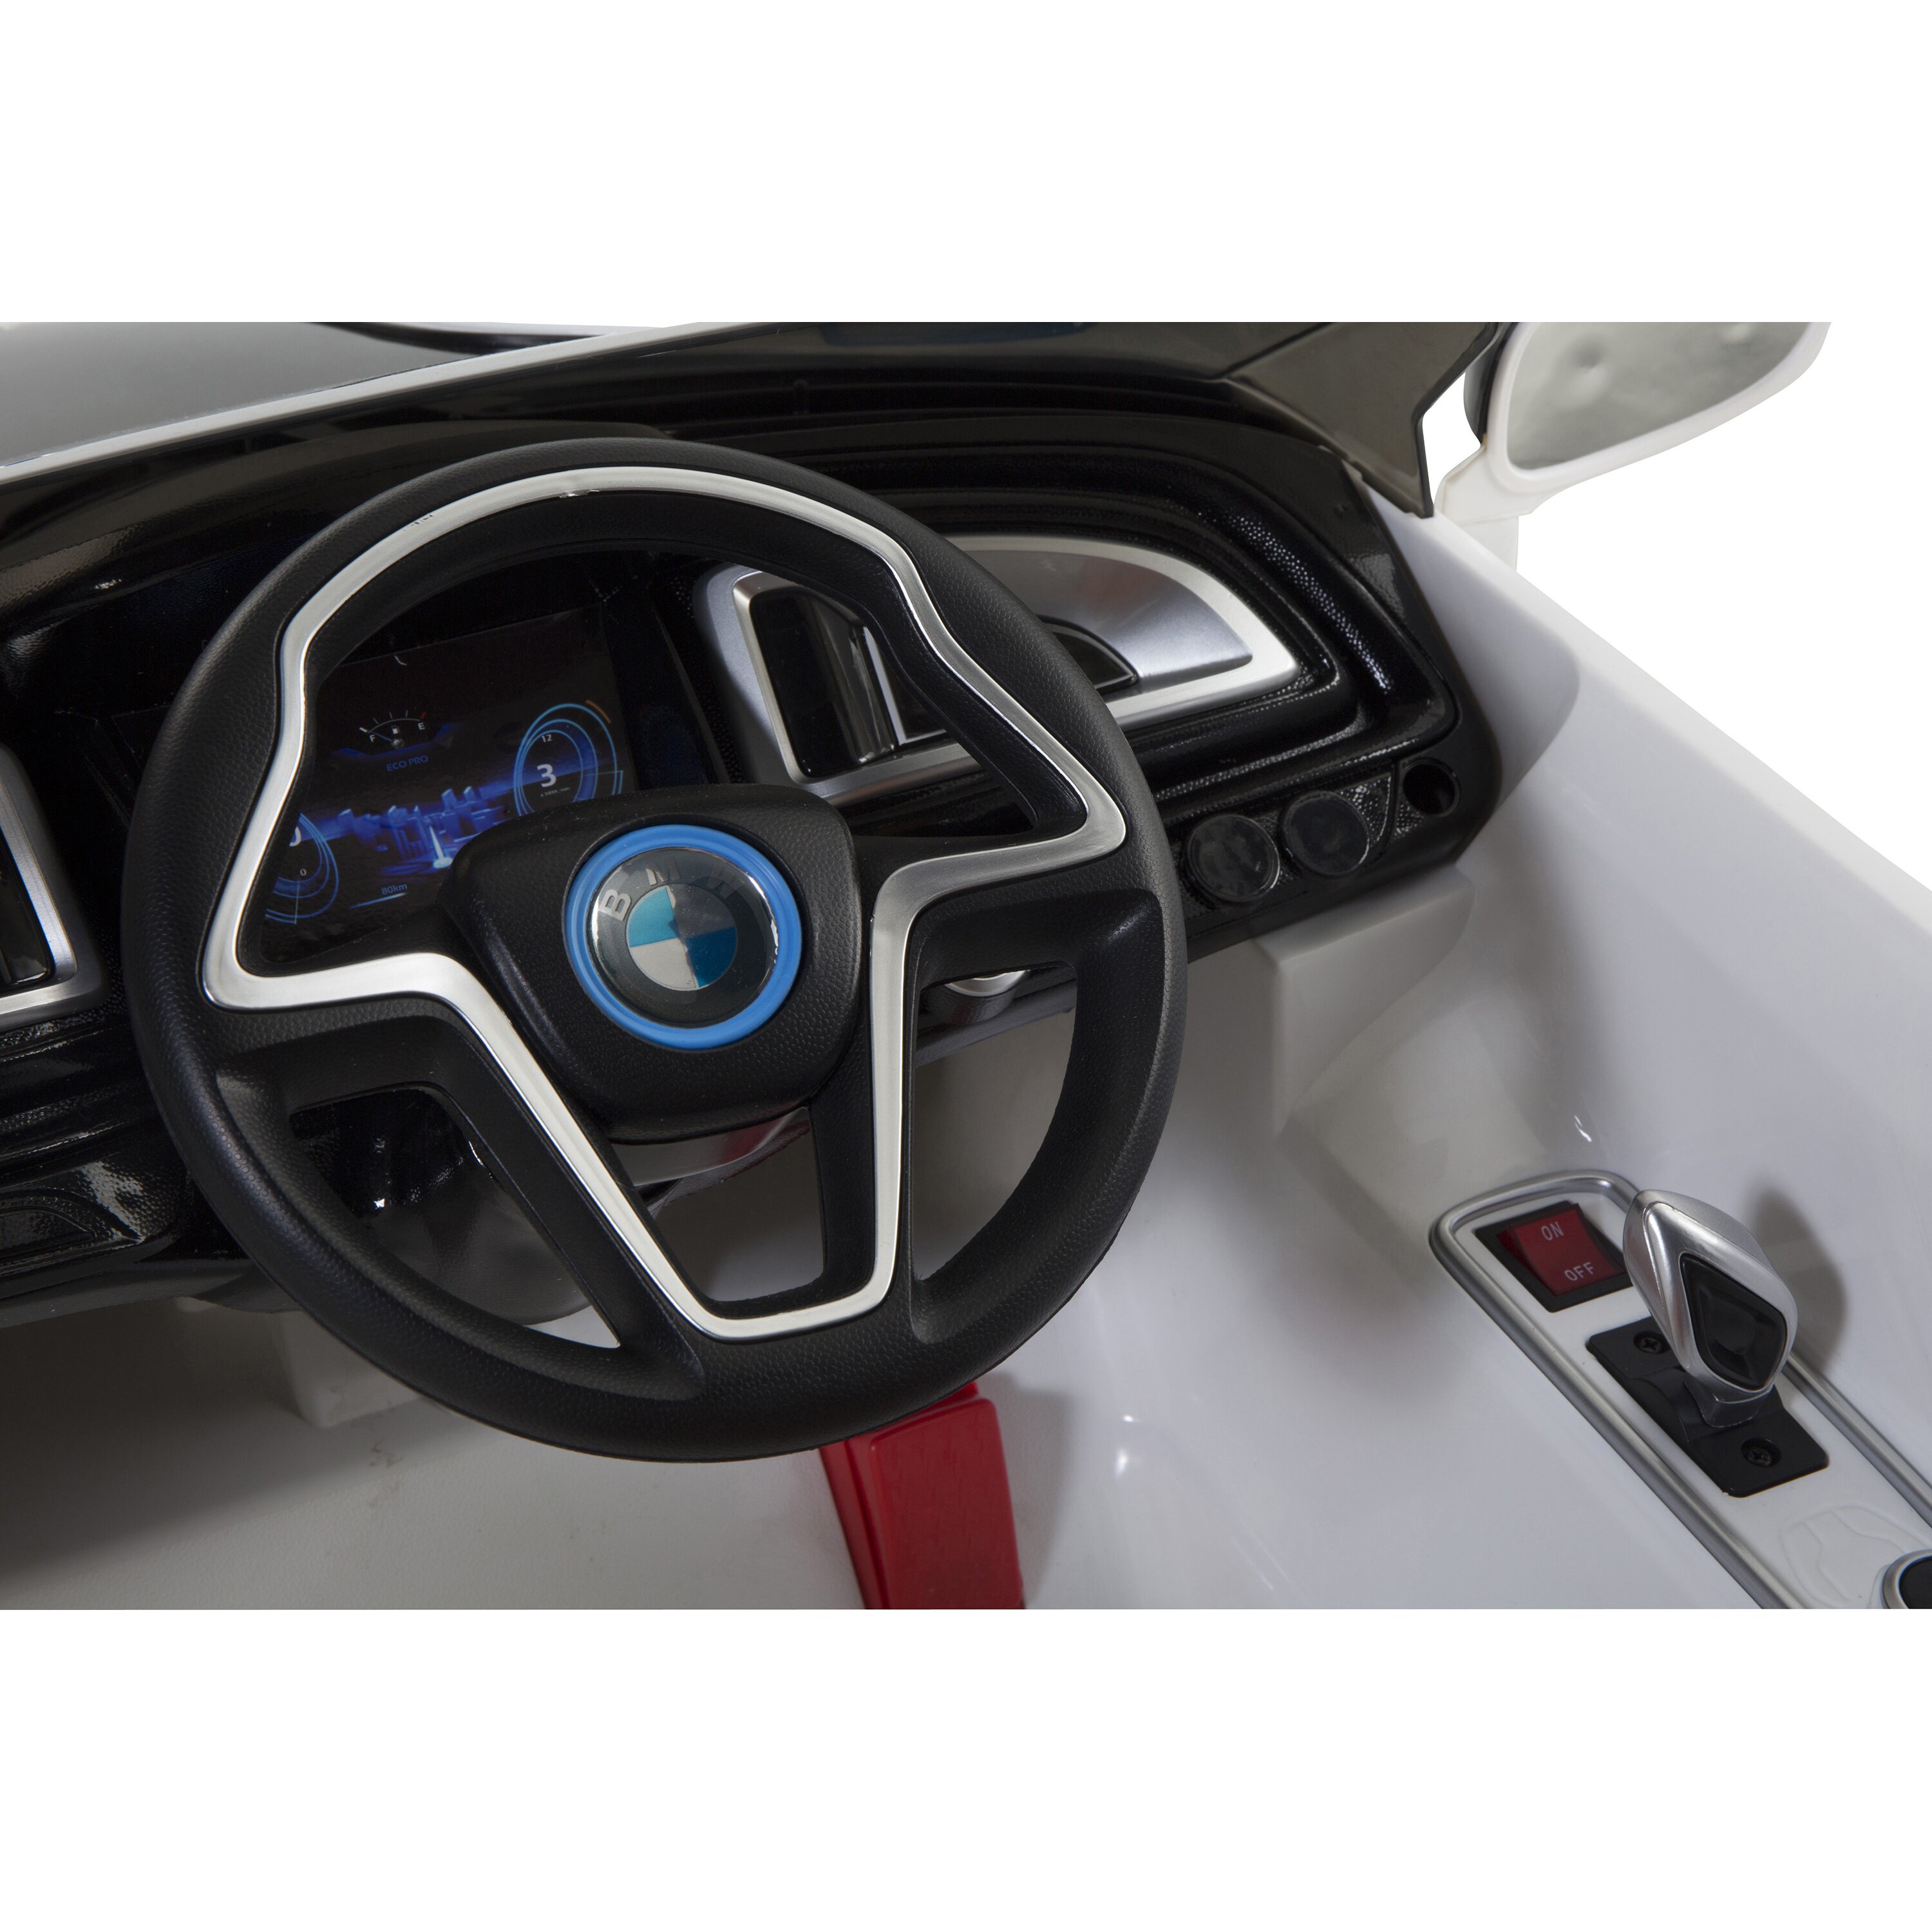 Dynacraft BMW 6V i8 Battery Powered Car & Reviews Wayfair